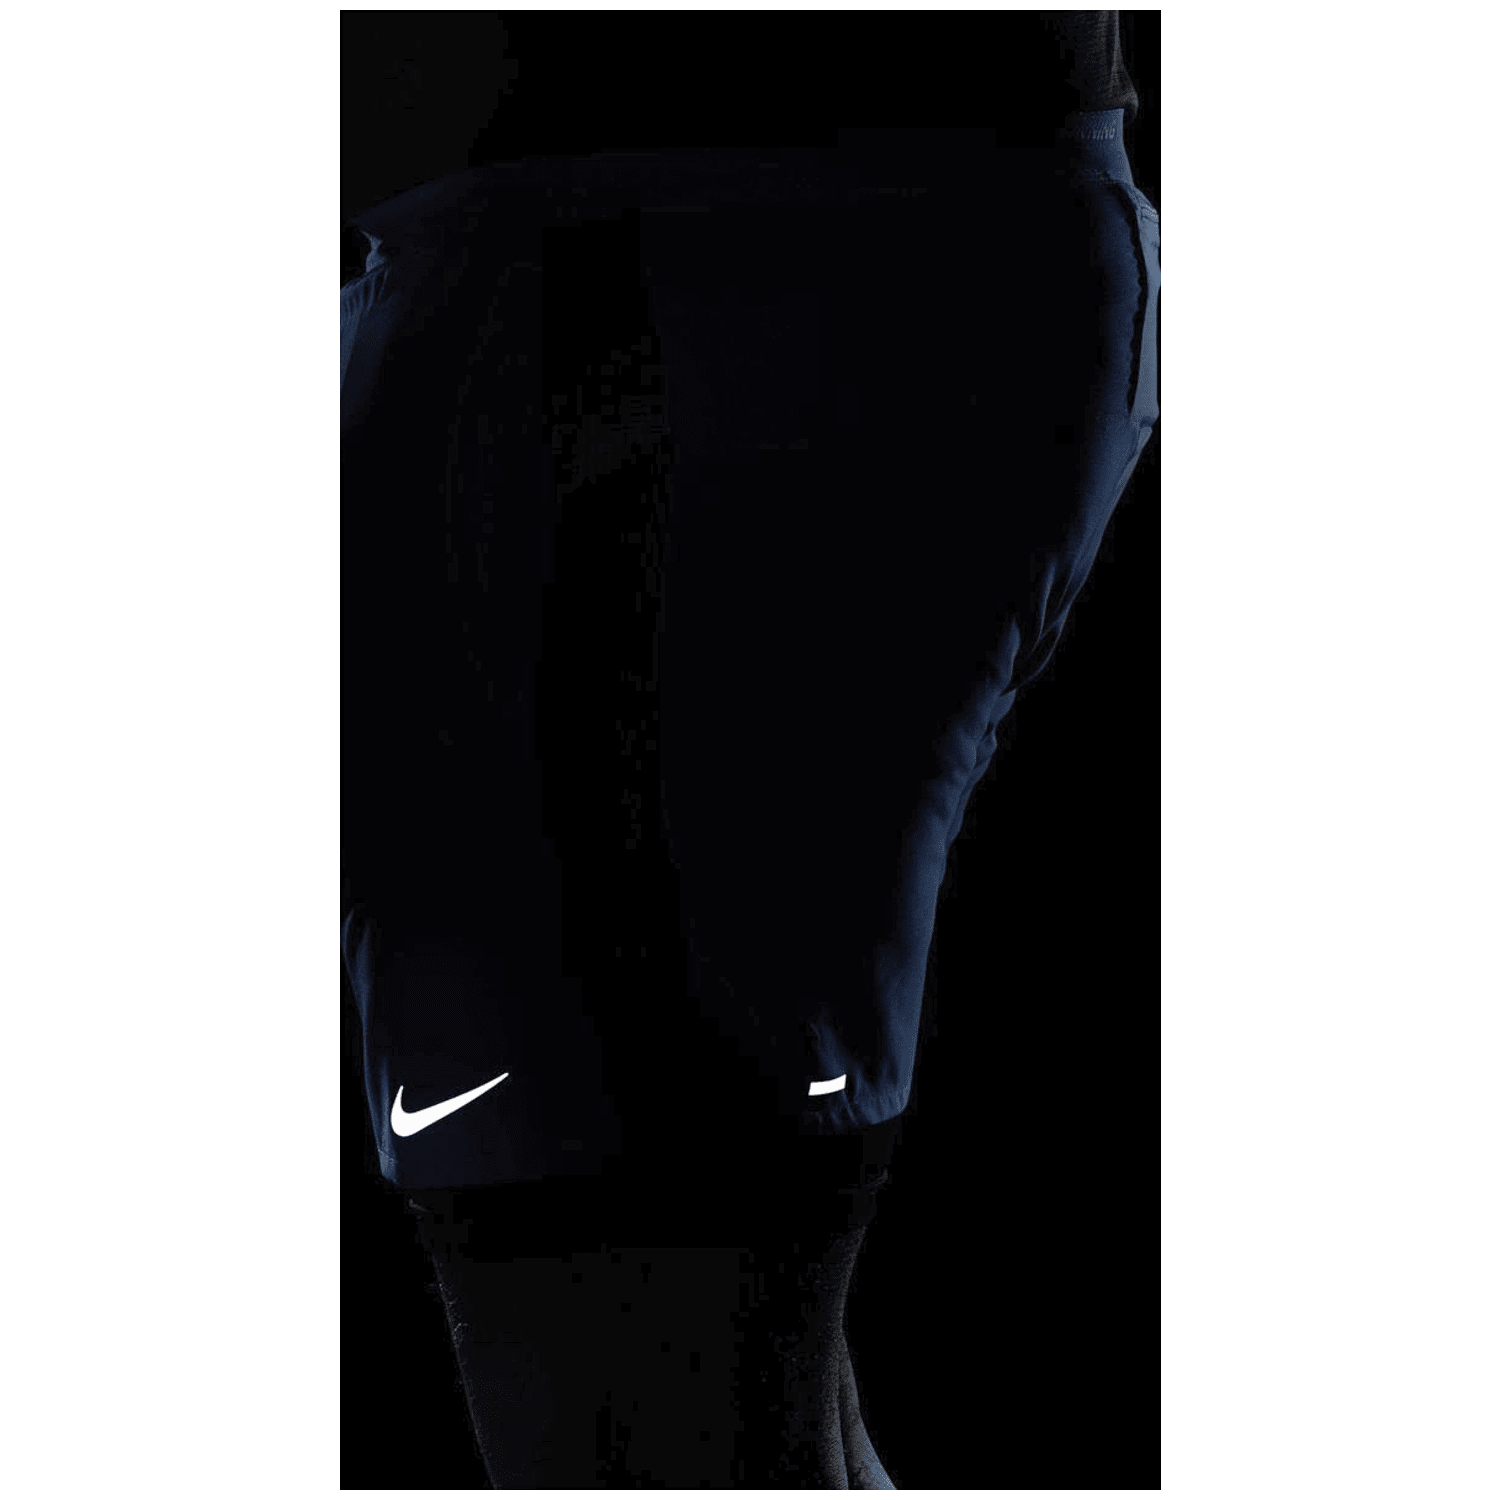 Nike Dri-FIT Stride Hybrid Herren Shorts